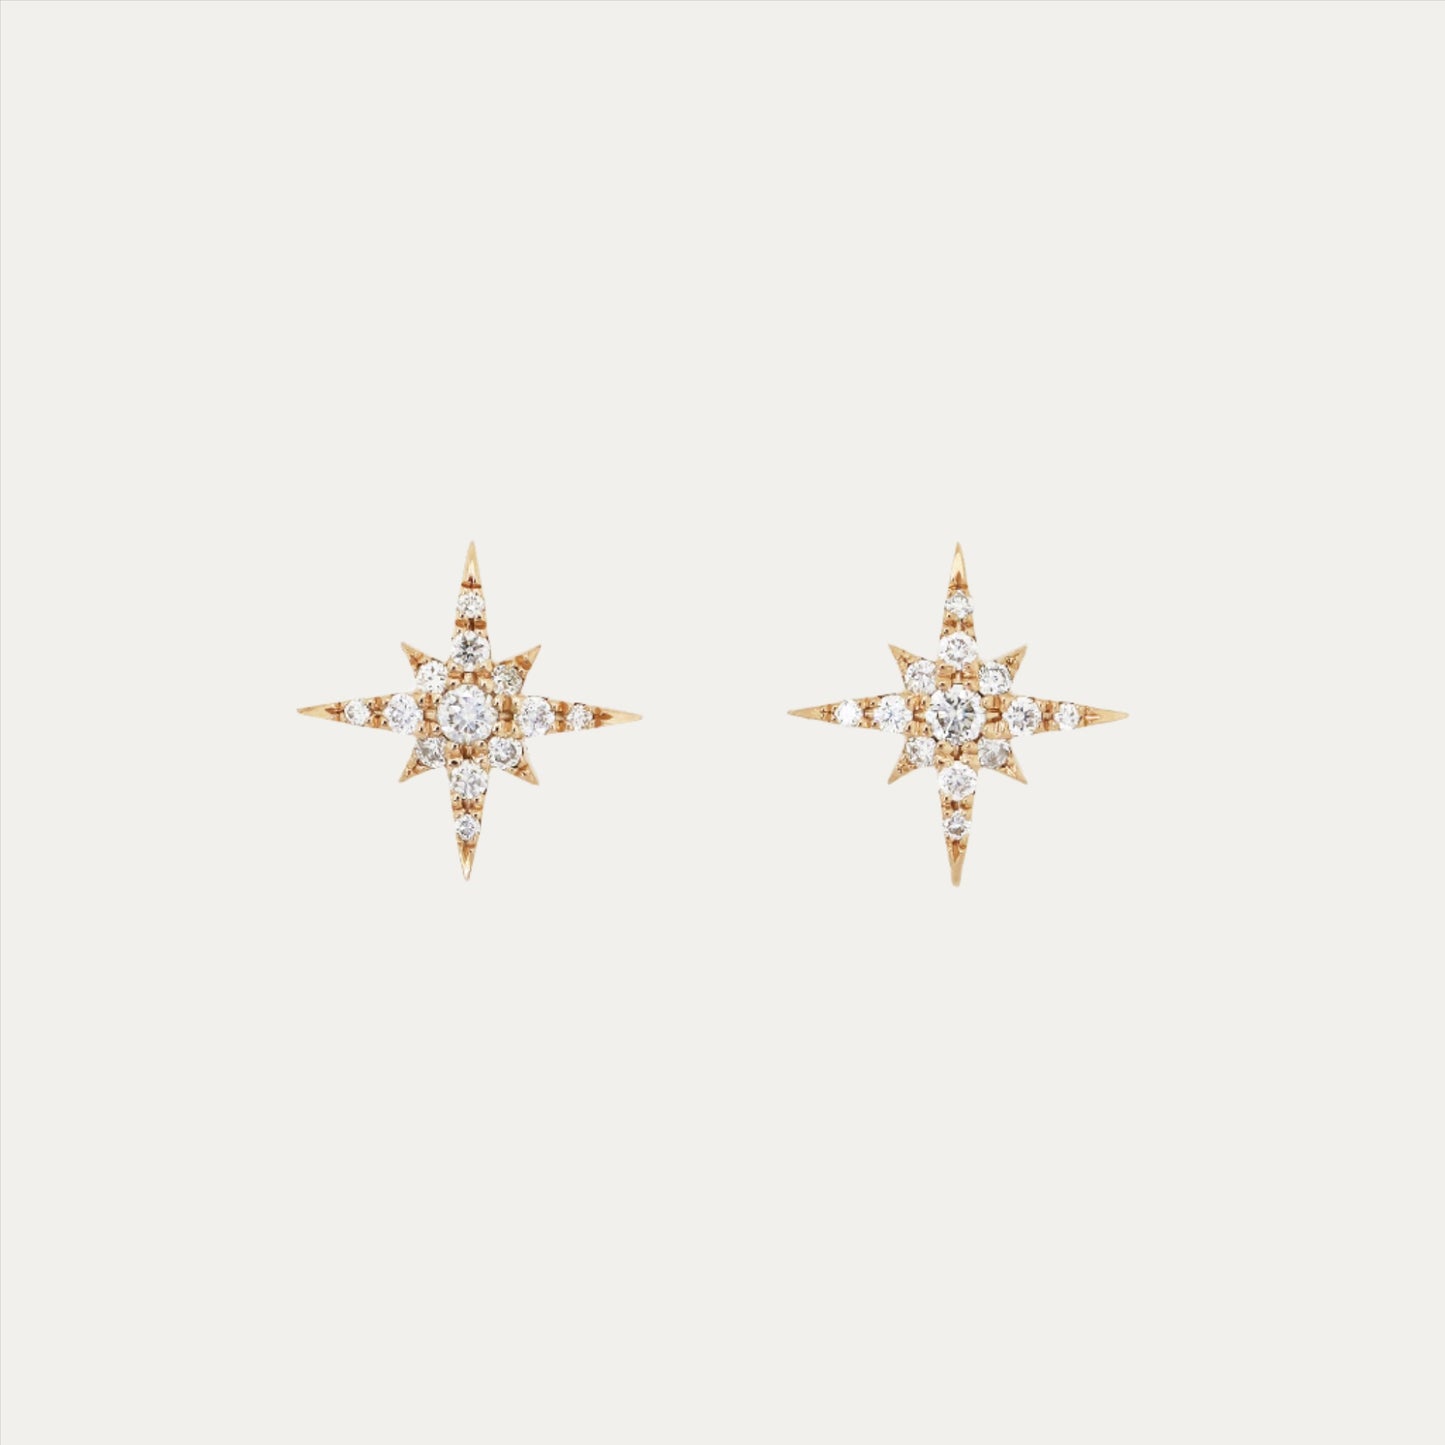 18k White/Rose Gold Meteorites Diamond Earrings, Pair